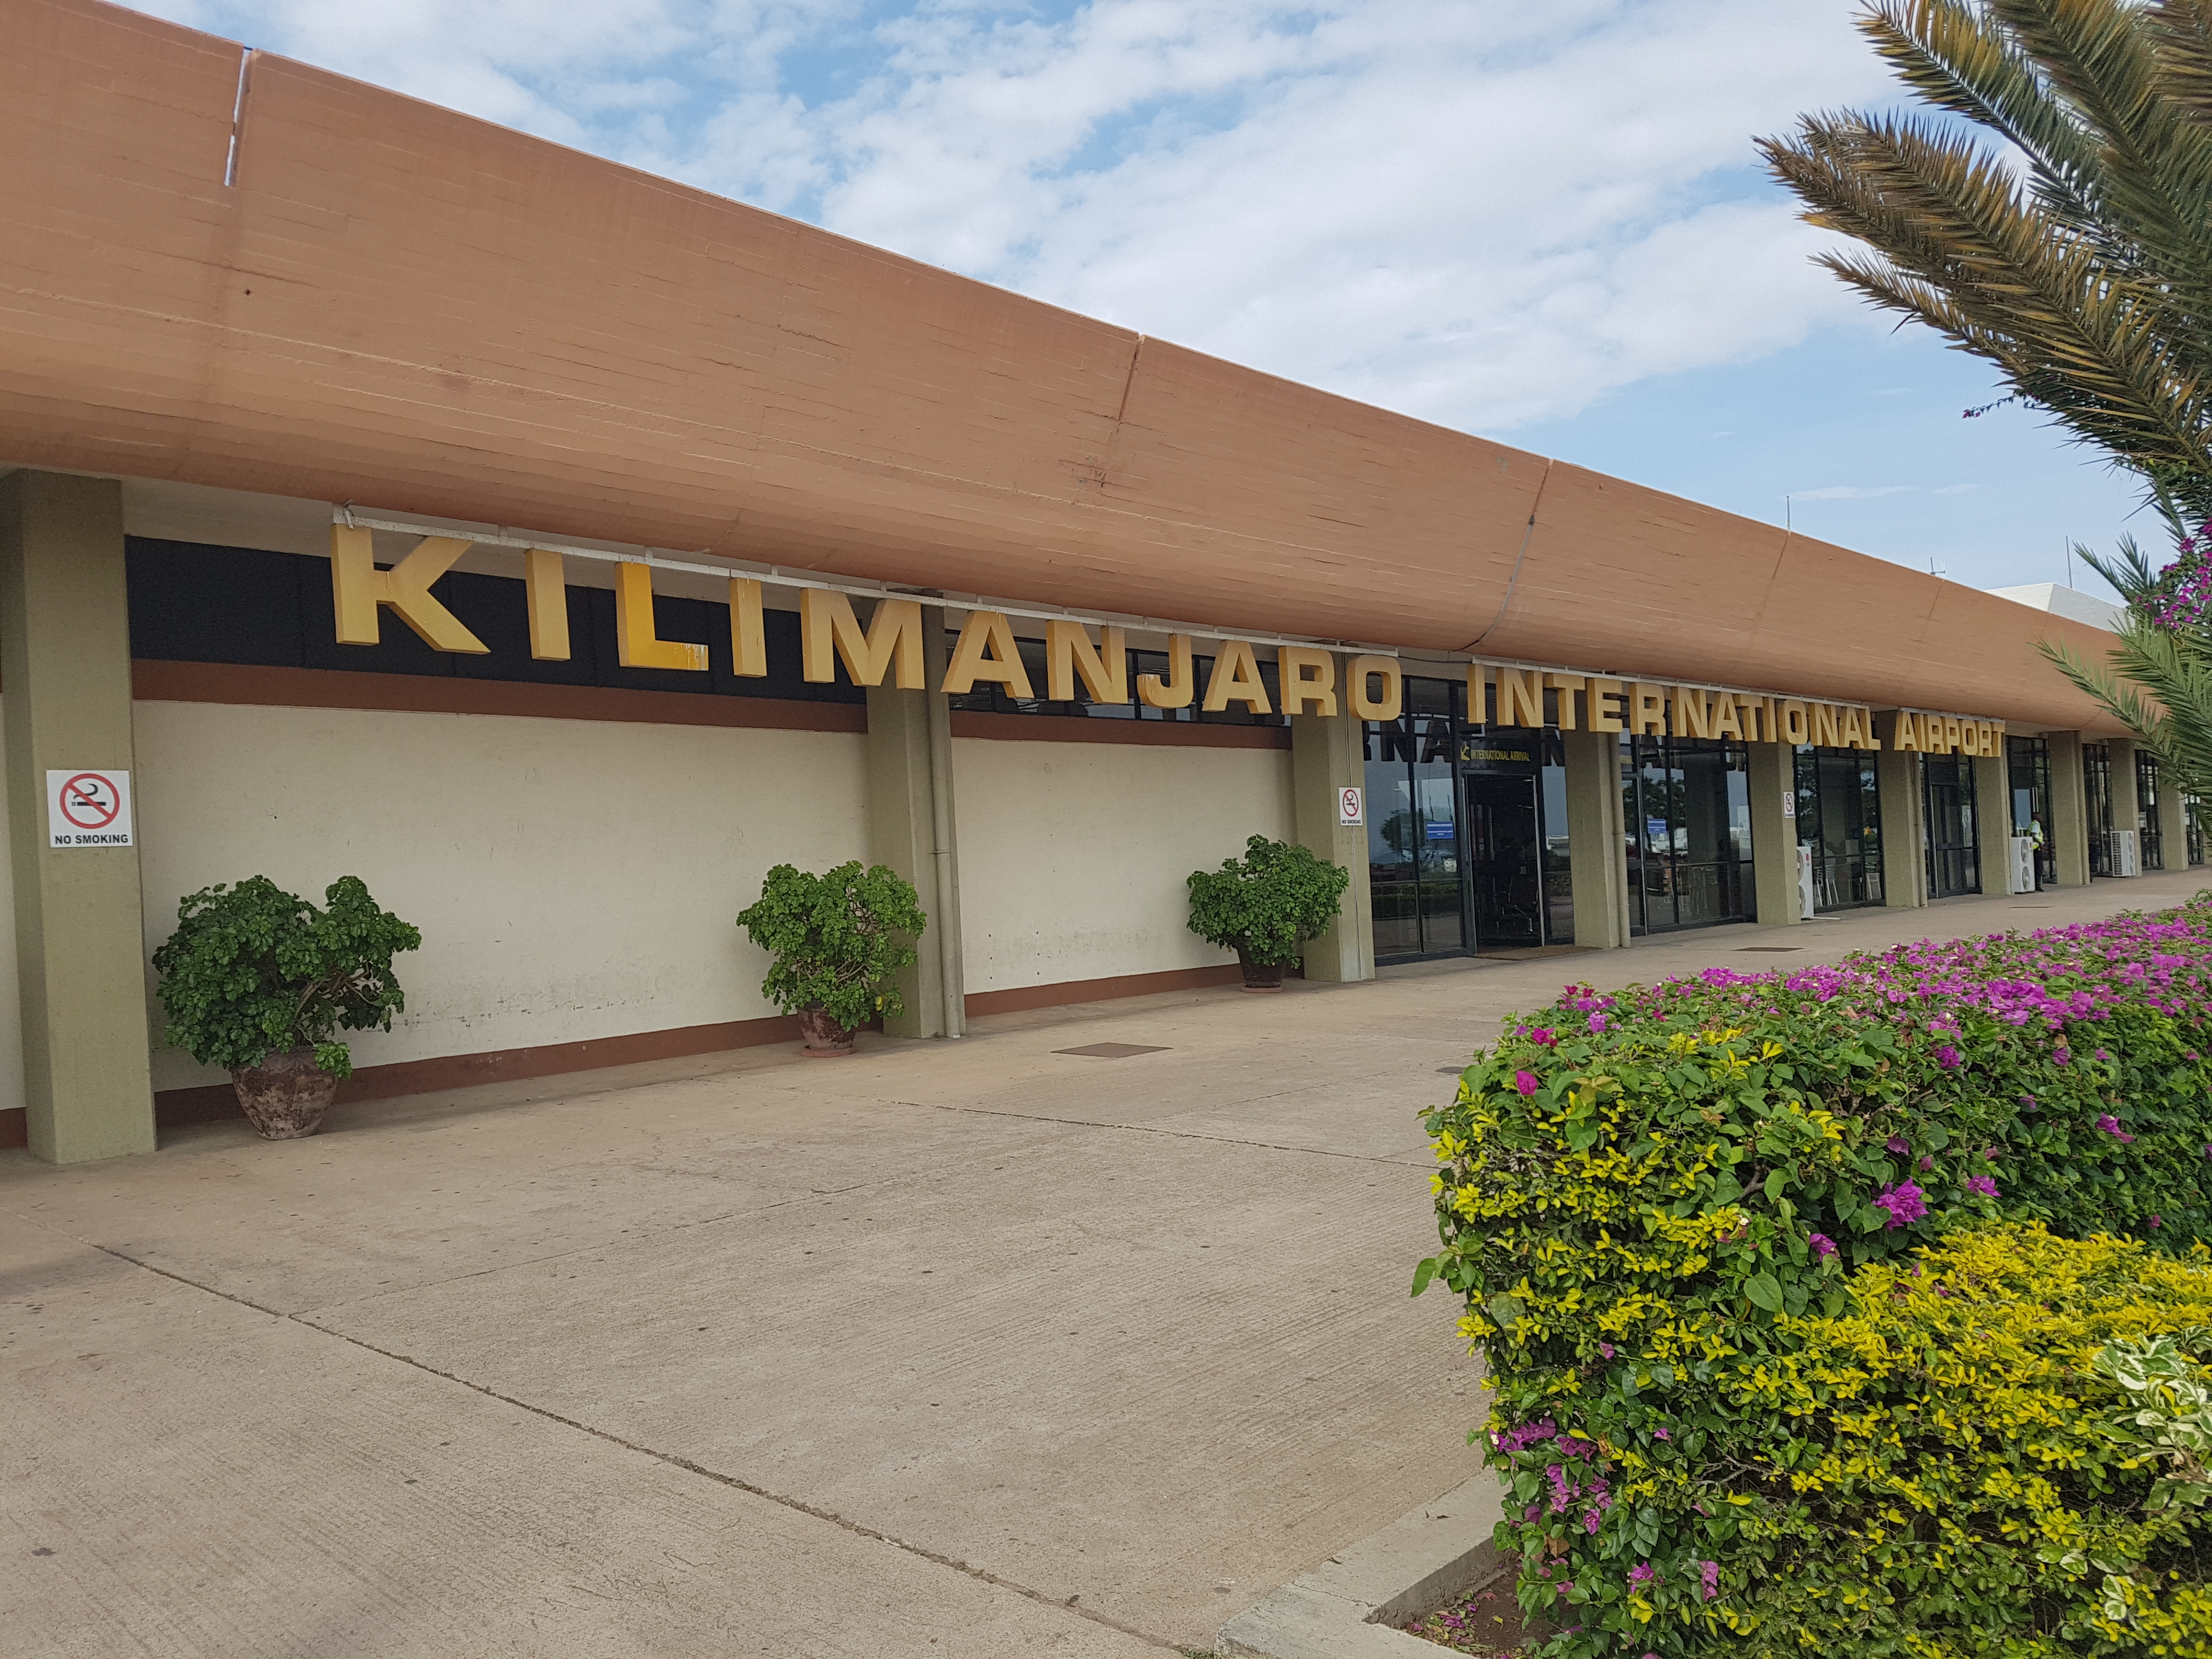 Kiliminjaro International Airport